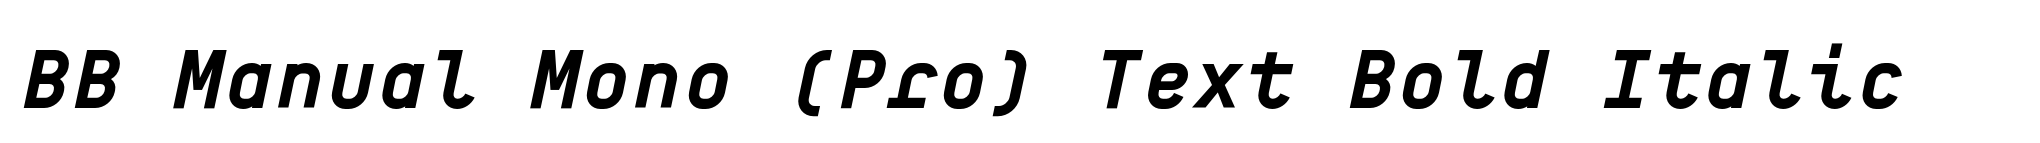 BB Manual Mono (Pro) Text Bold Italic image